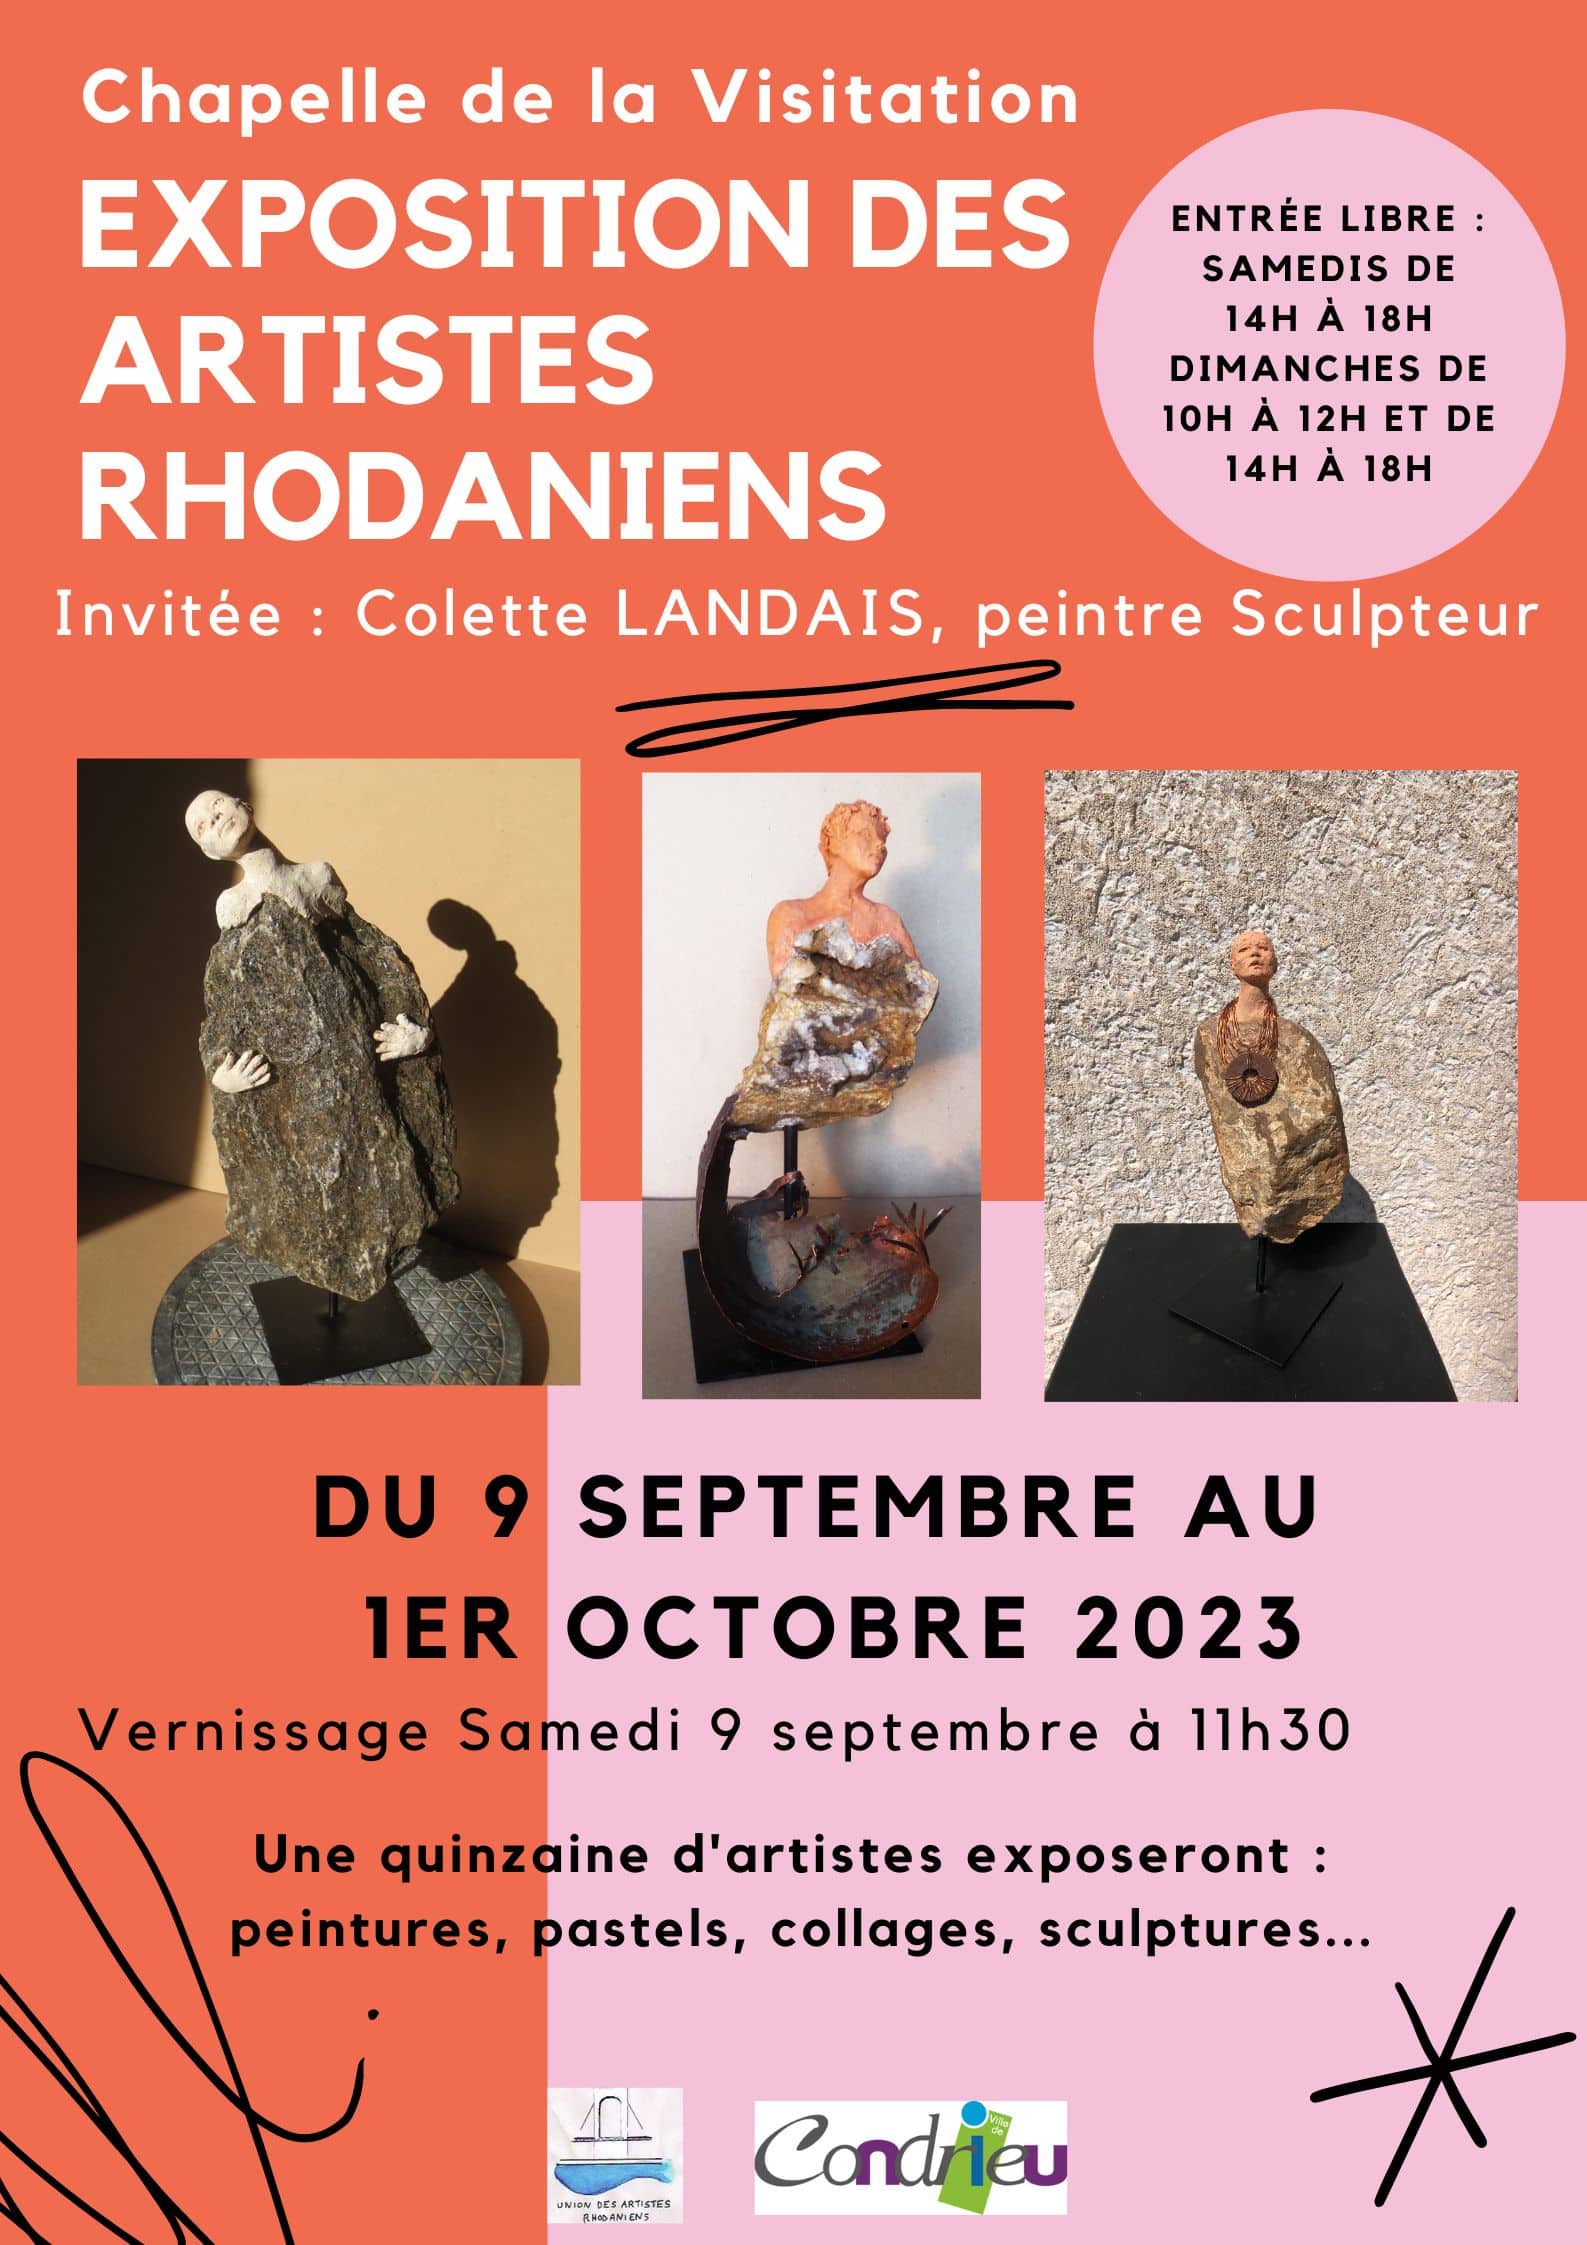 Exposition des artistes rhodaniens